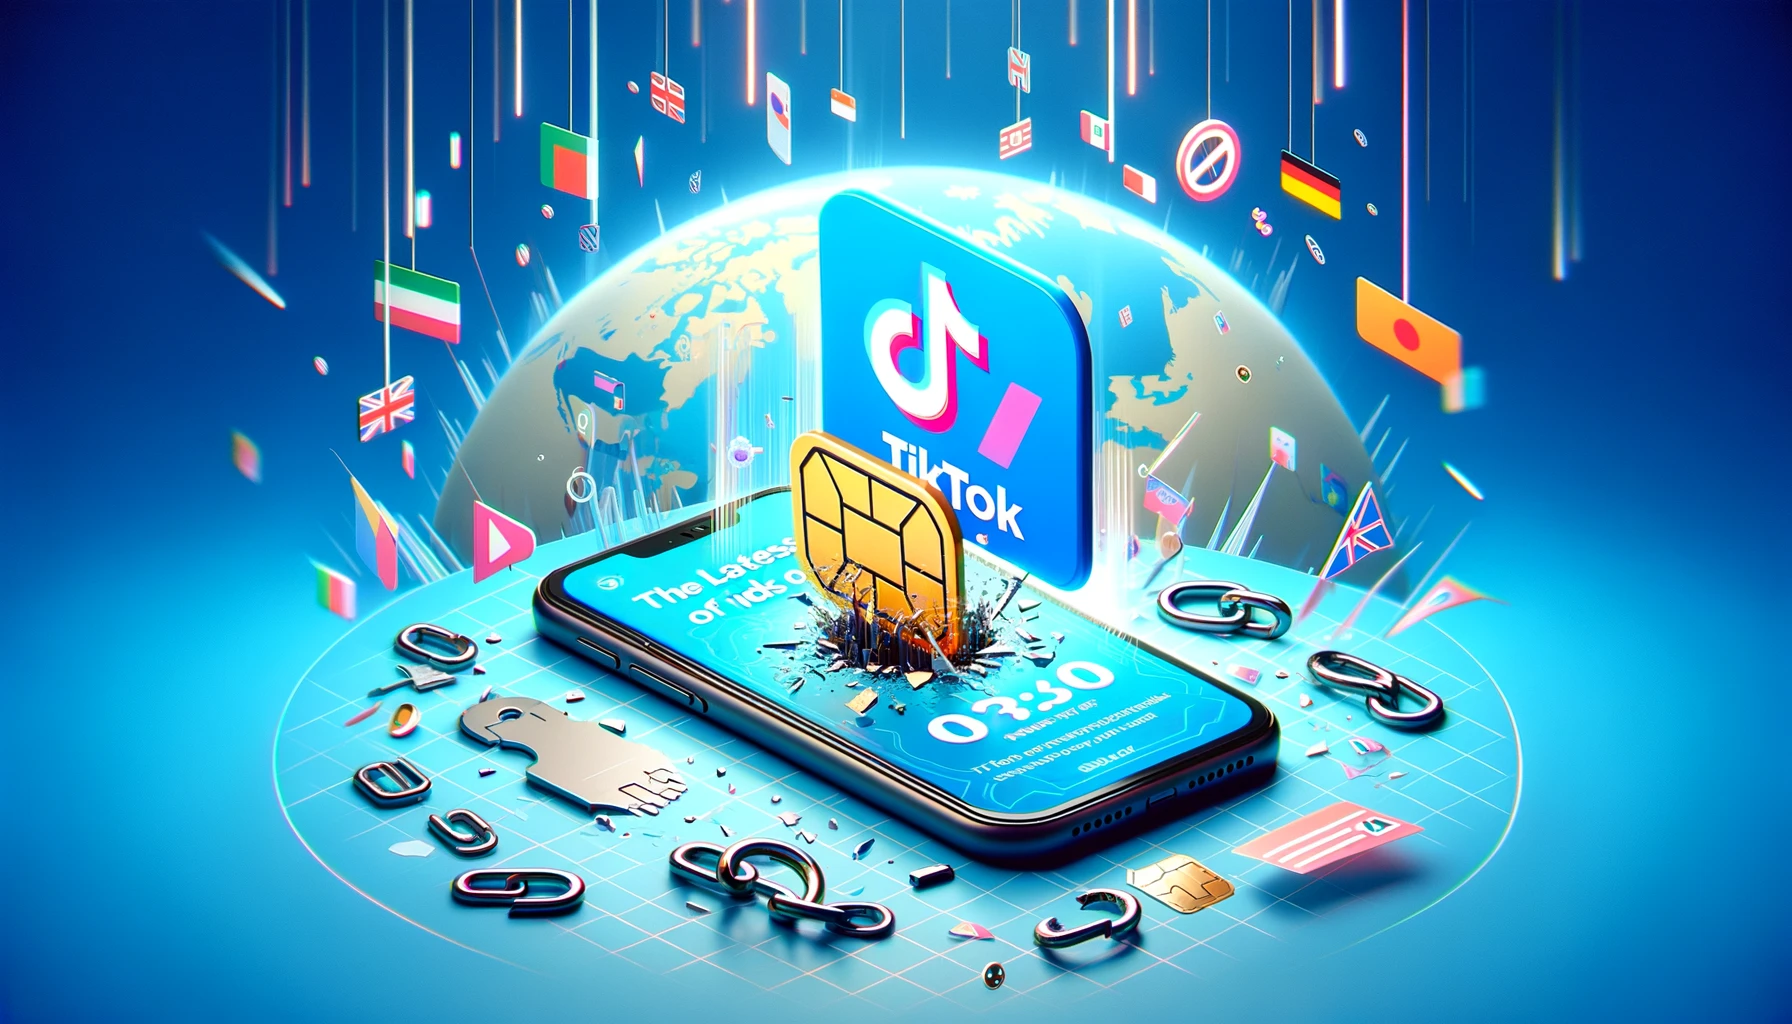 The latest version of TikTok has rid of SIM card restrictions